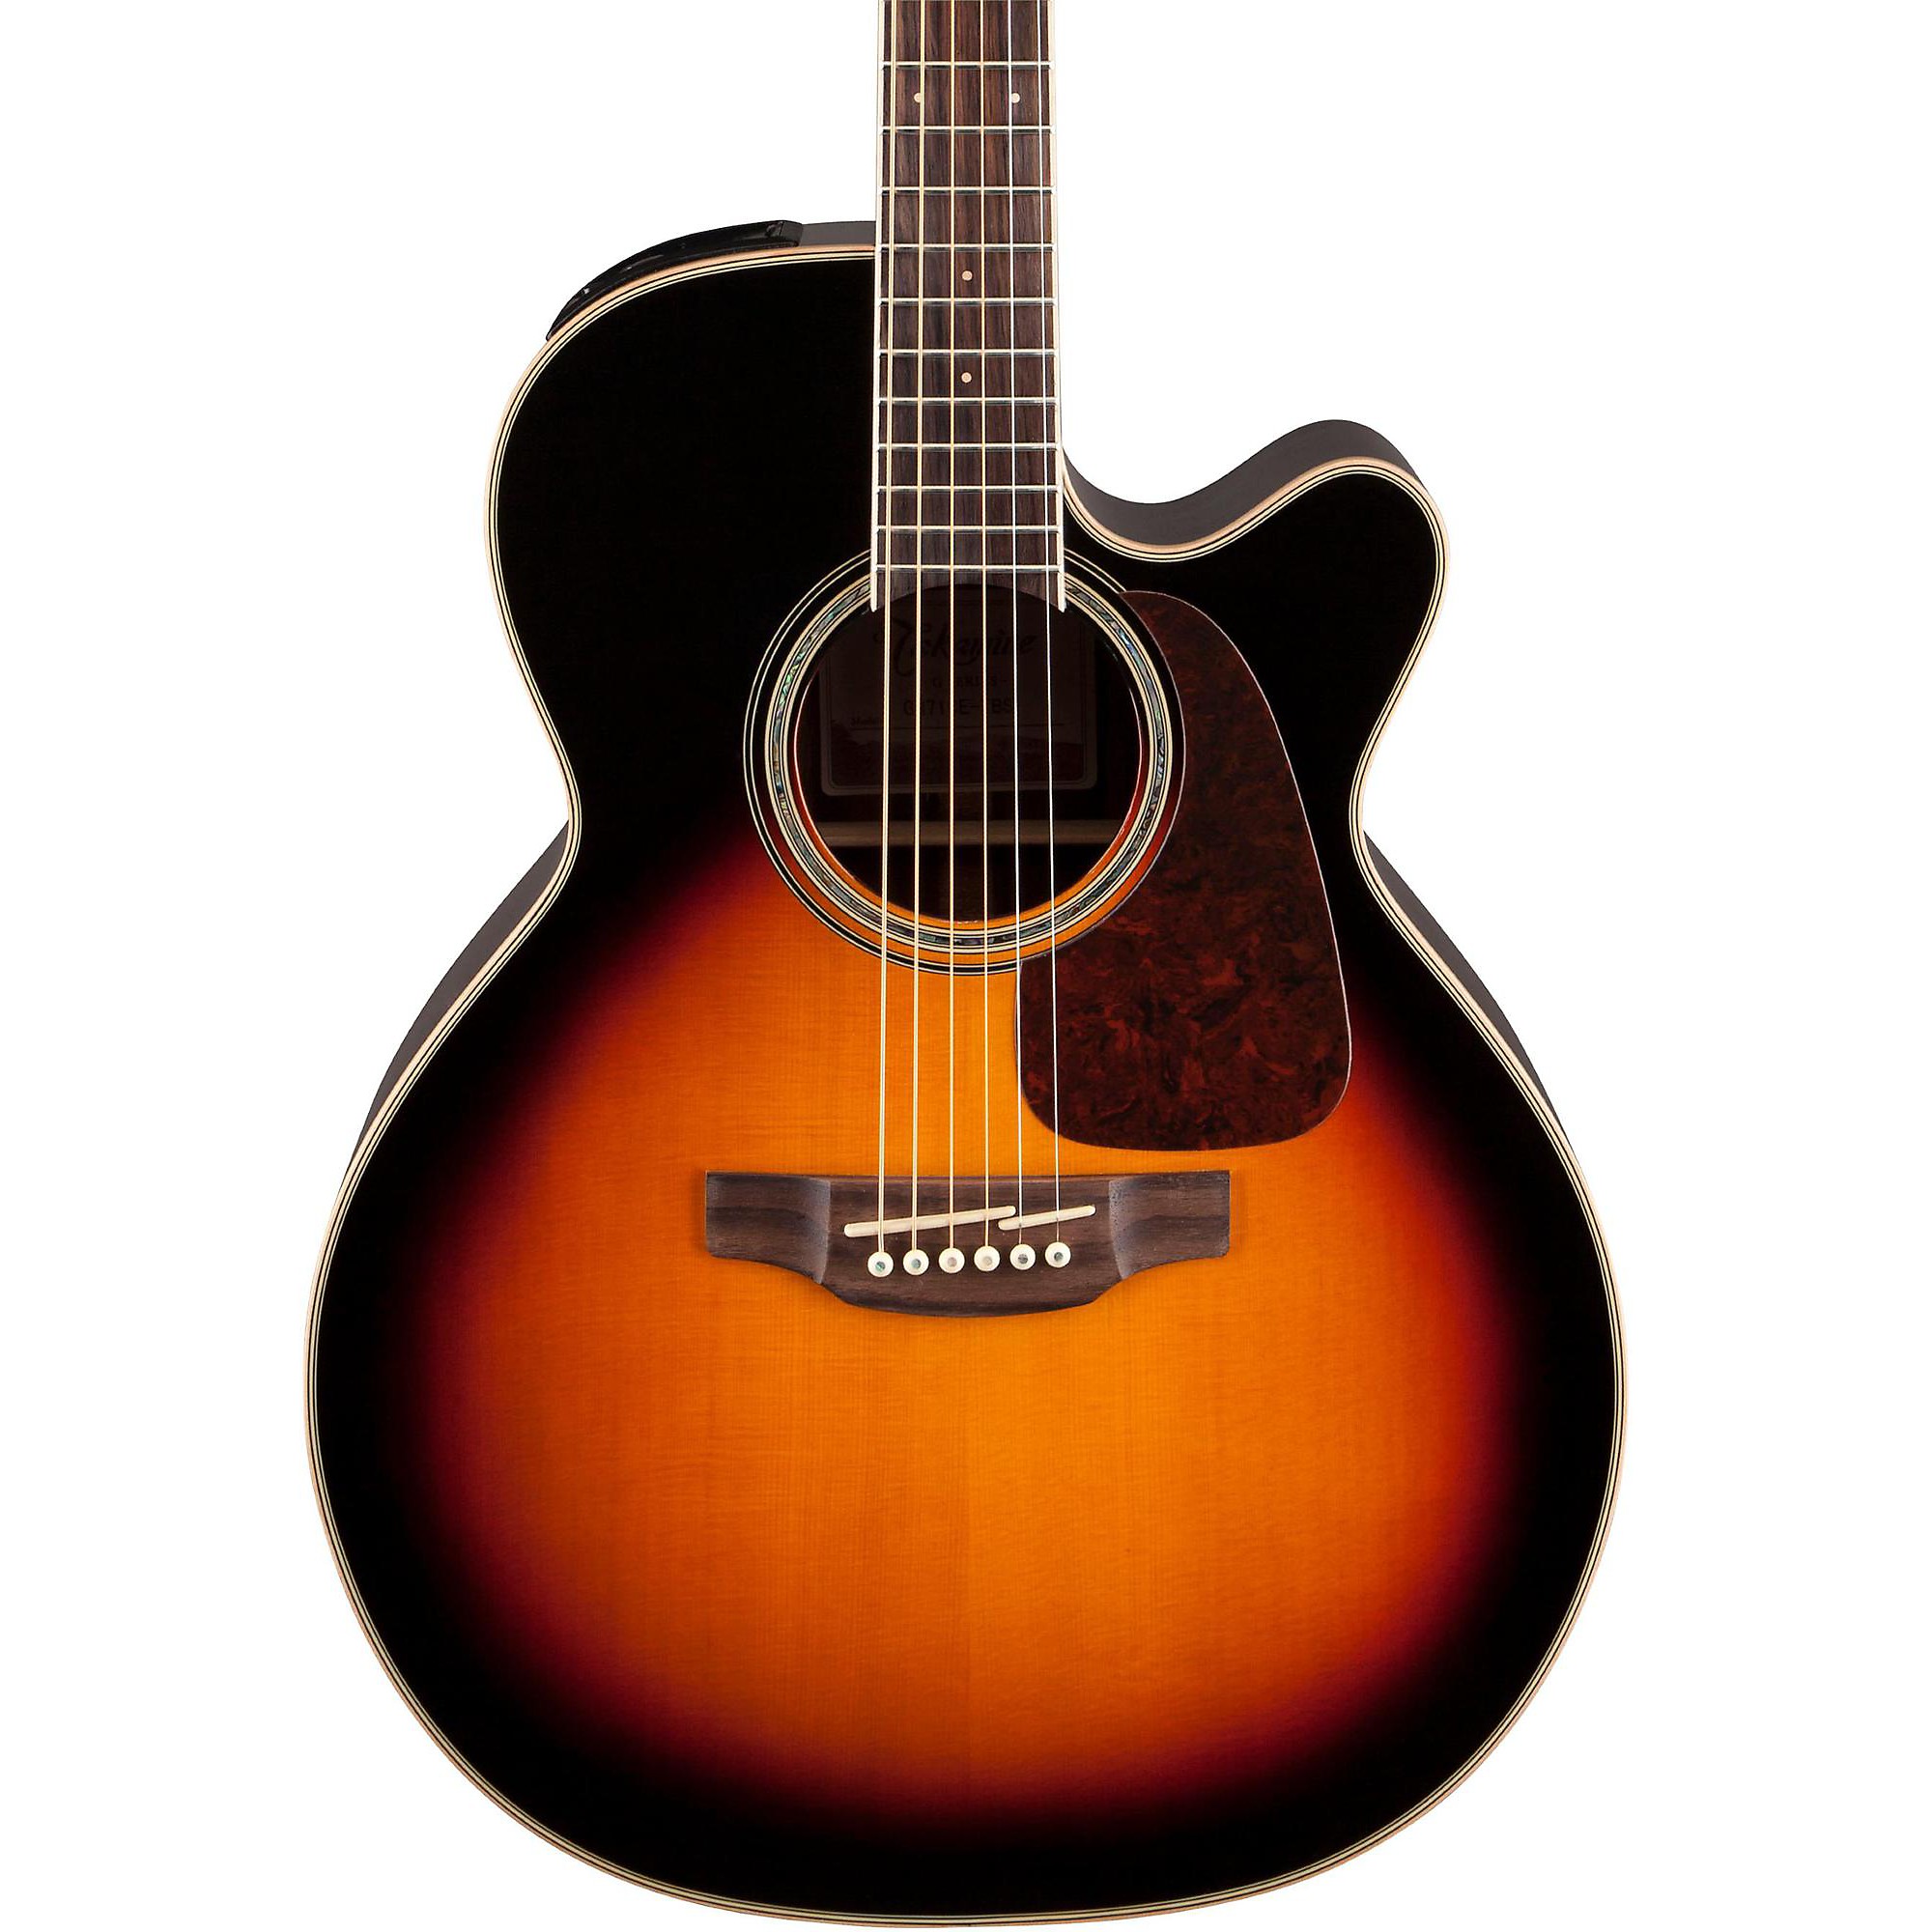 Акустически-электрическая гитара Takamine G Series GN71CE NEX Cutaway Gloss Sunburst takamine gn71ce nat электроакустическая гитара nex cutaway цвет натуральный